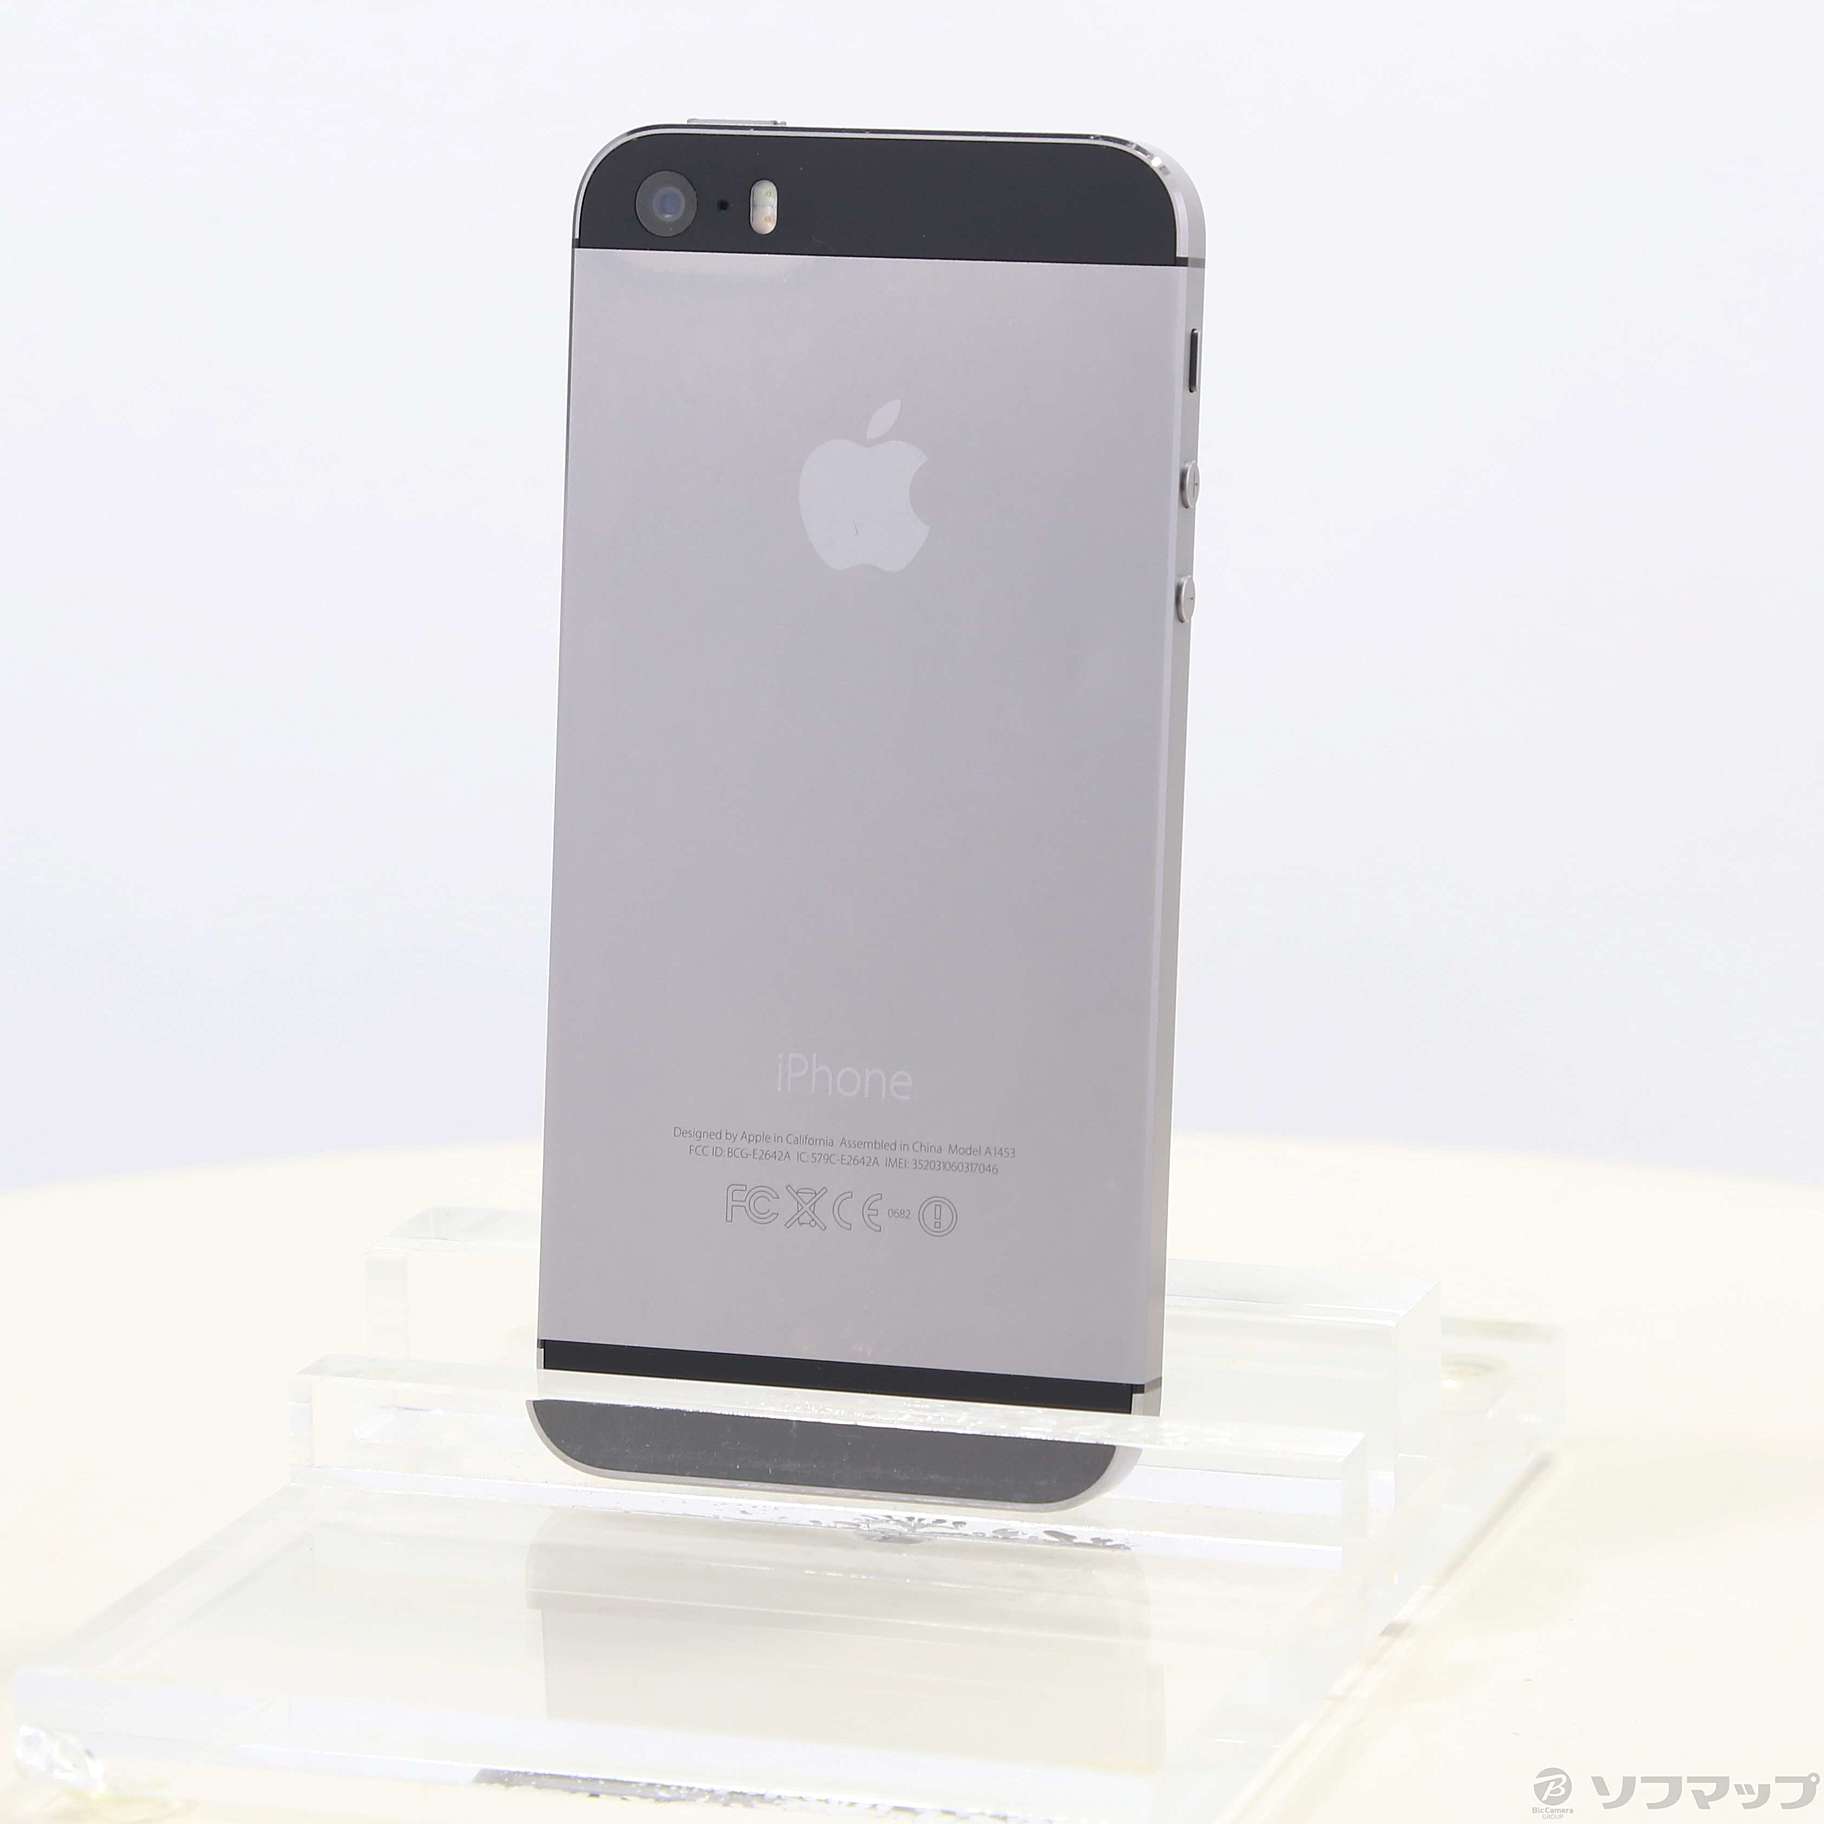 iPhone 5s Space Gray 64 GB docomo - スマートフォン本体